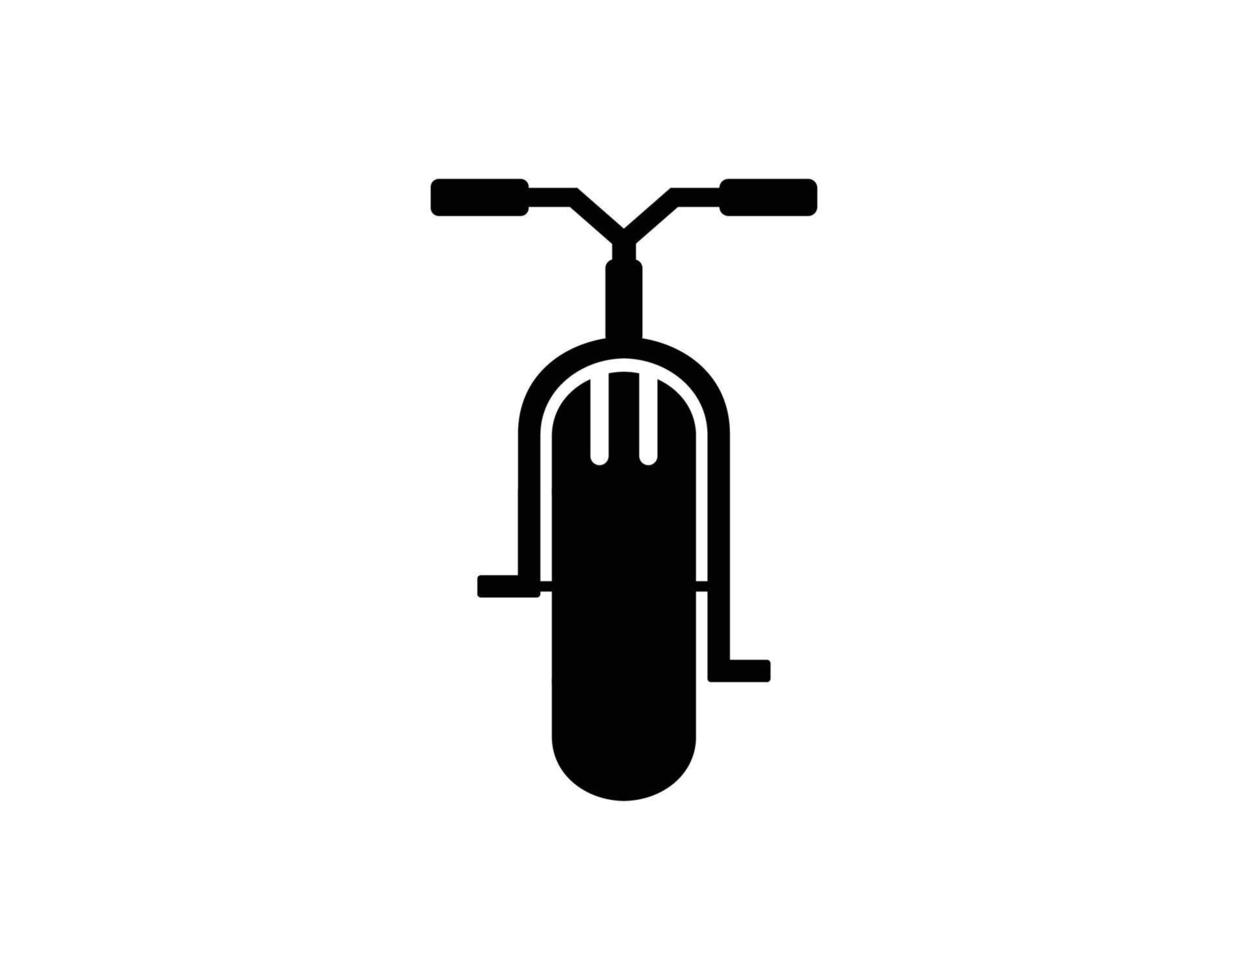 fietsers podcast logo ontwerpsjabloon. podcast fiets logo ontwerp zwart vector